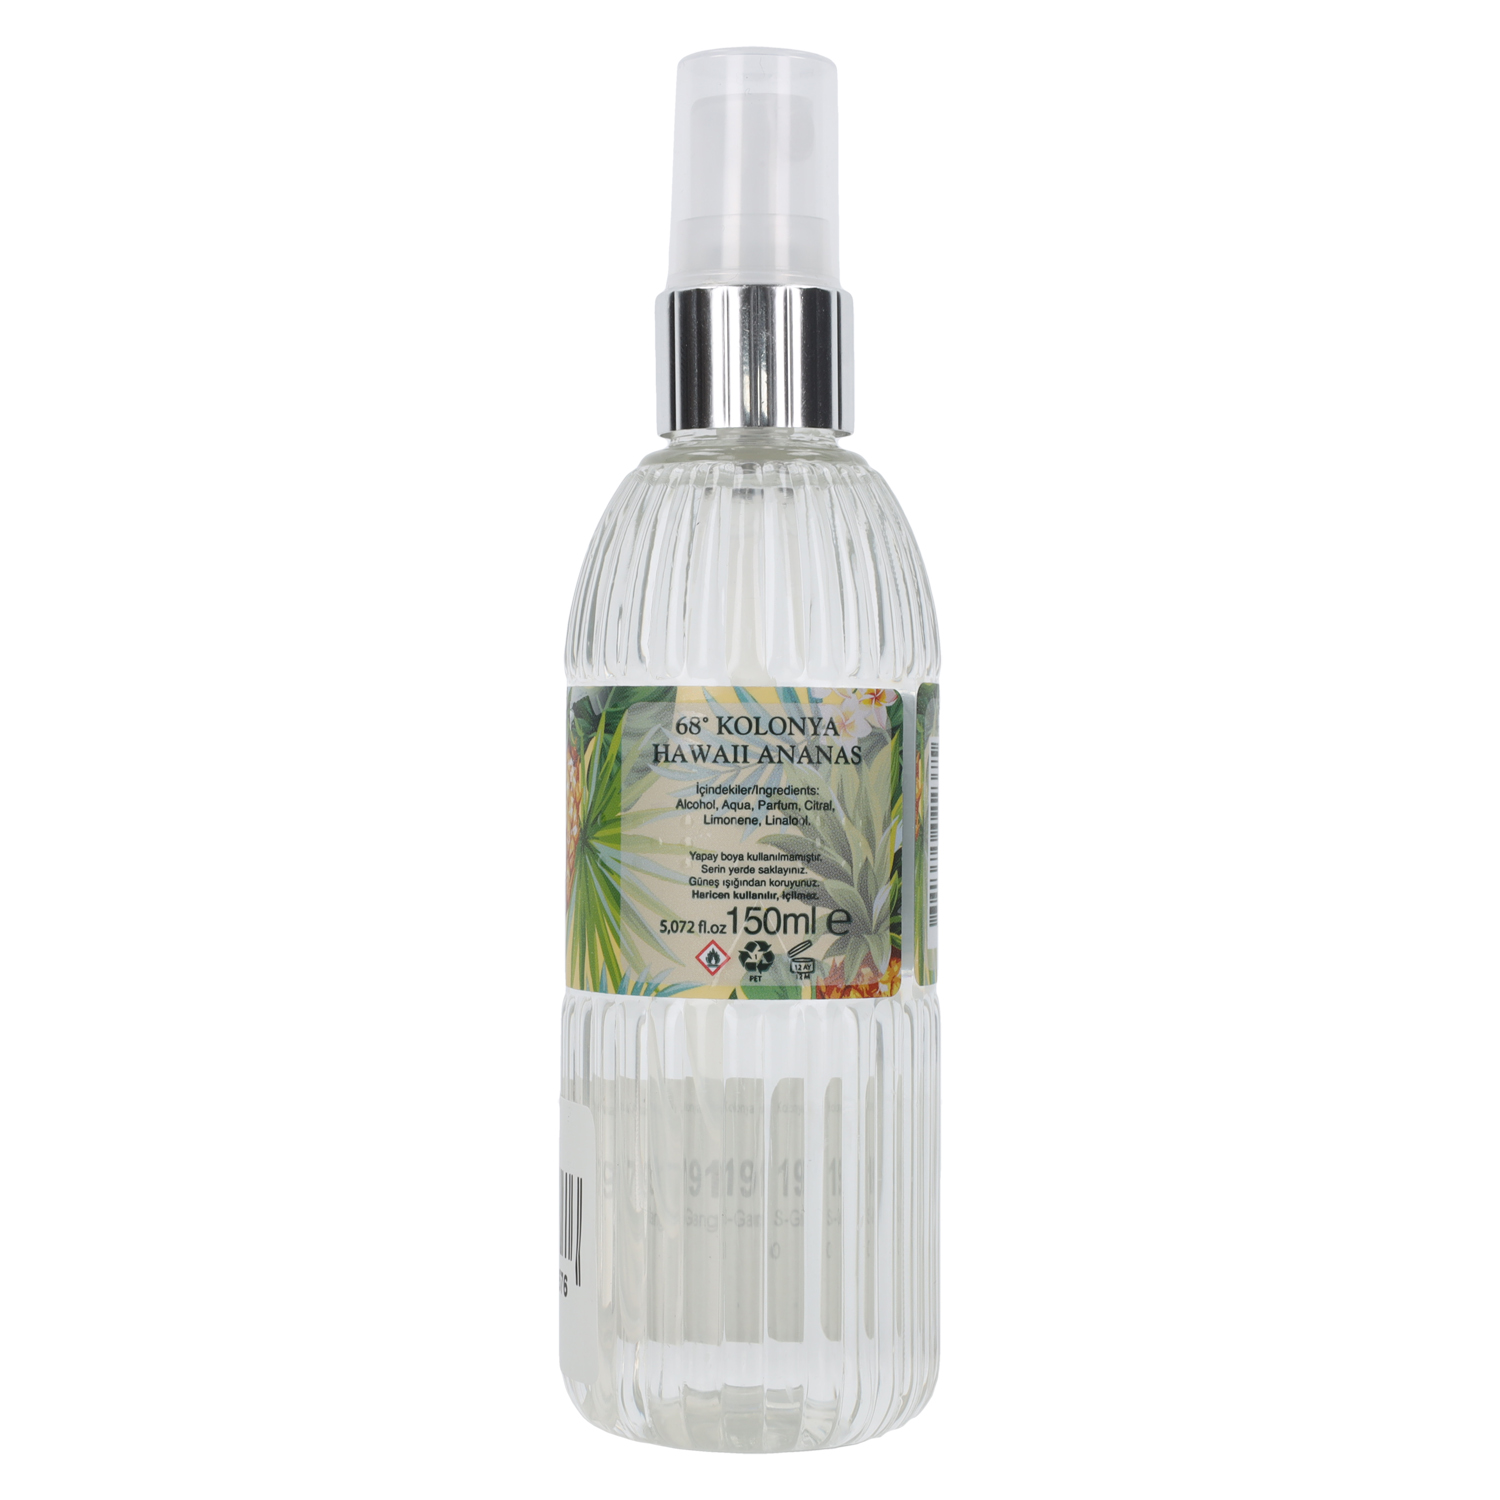 Kolonya Hawai Ananas (Hawai Pineapple) fragrancy 150 ml Spray